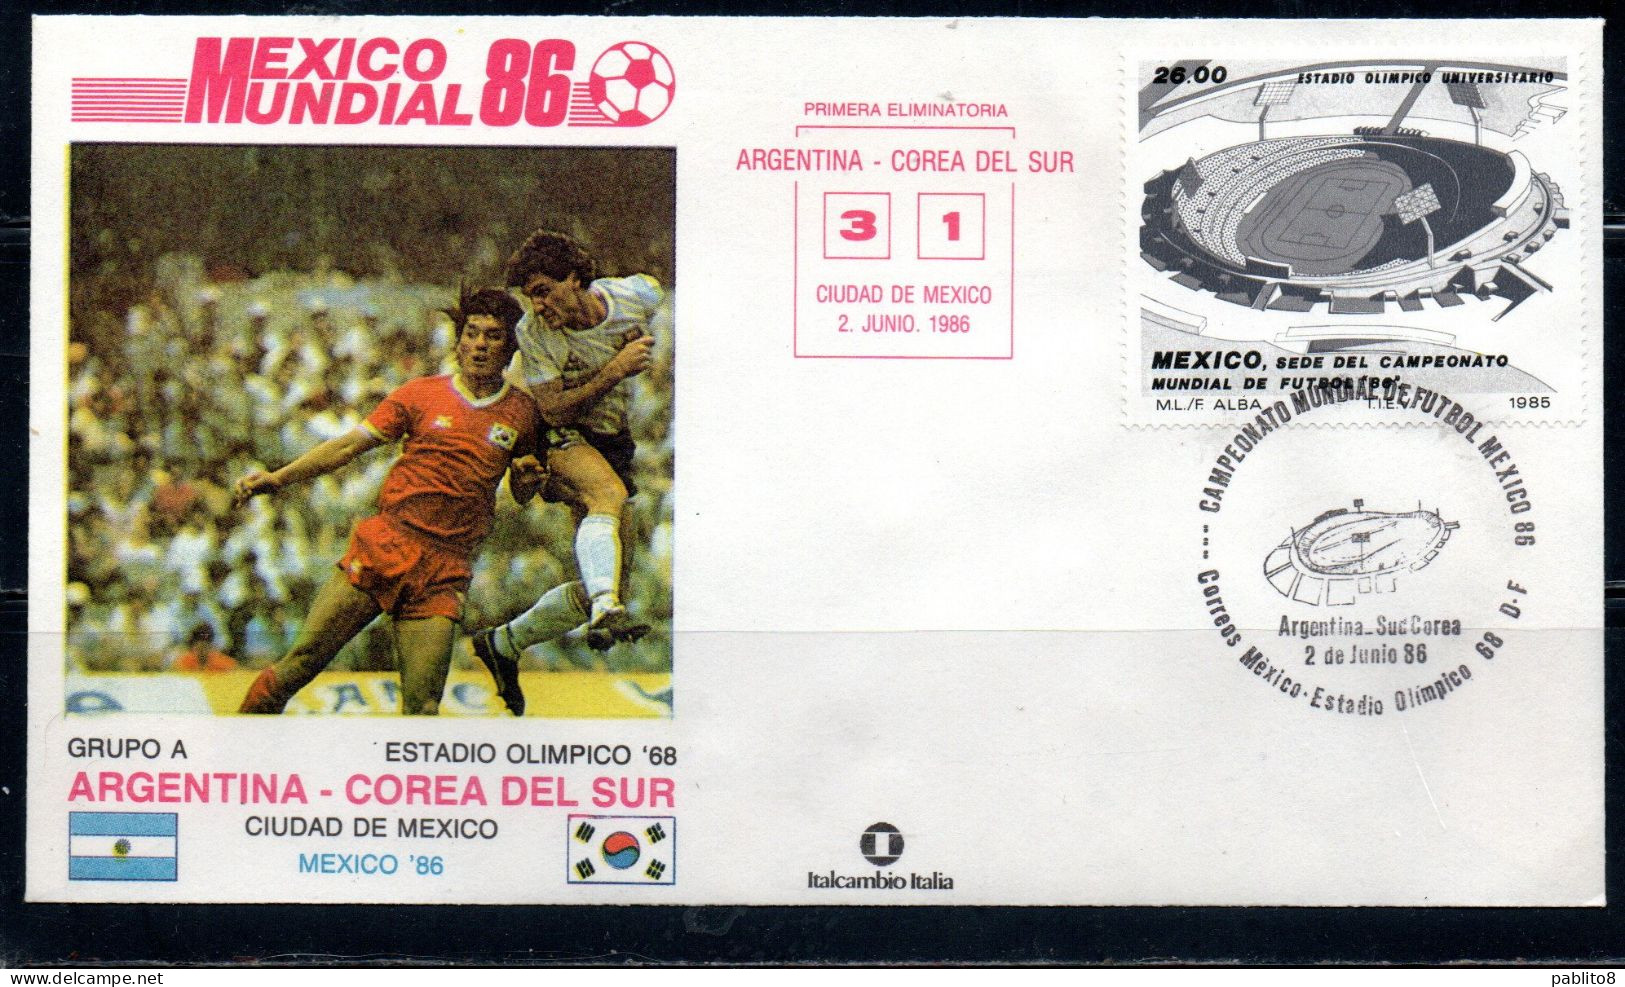 MEXICO 86 MESSICO 1986 SOCCER FIFA WORLD CUP CALCIO ARGENTINA - COREA DEL SUR SOUTH SUD 3-1 CIUDAD DE MEXICO FDC COVER - México